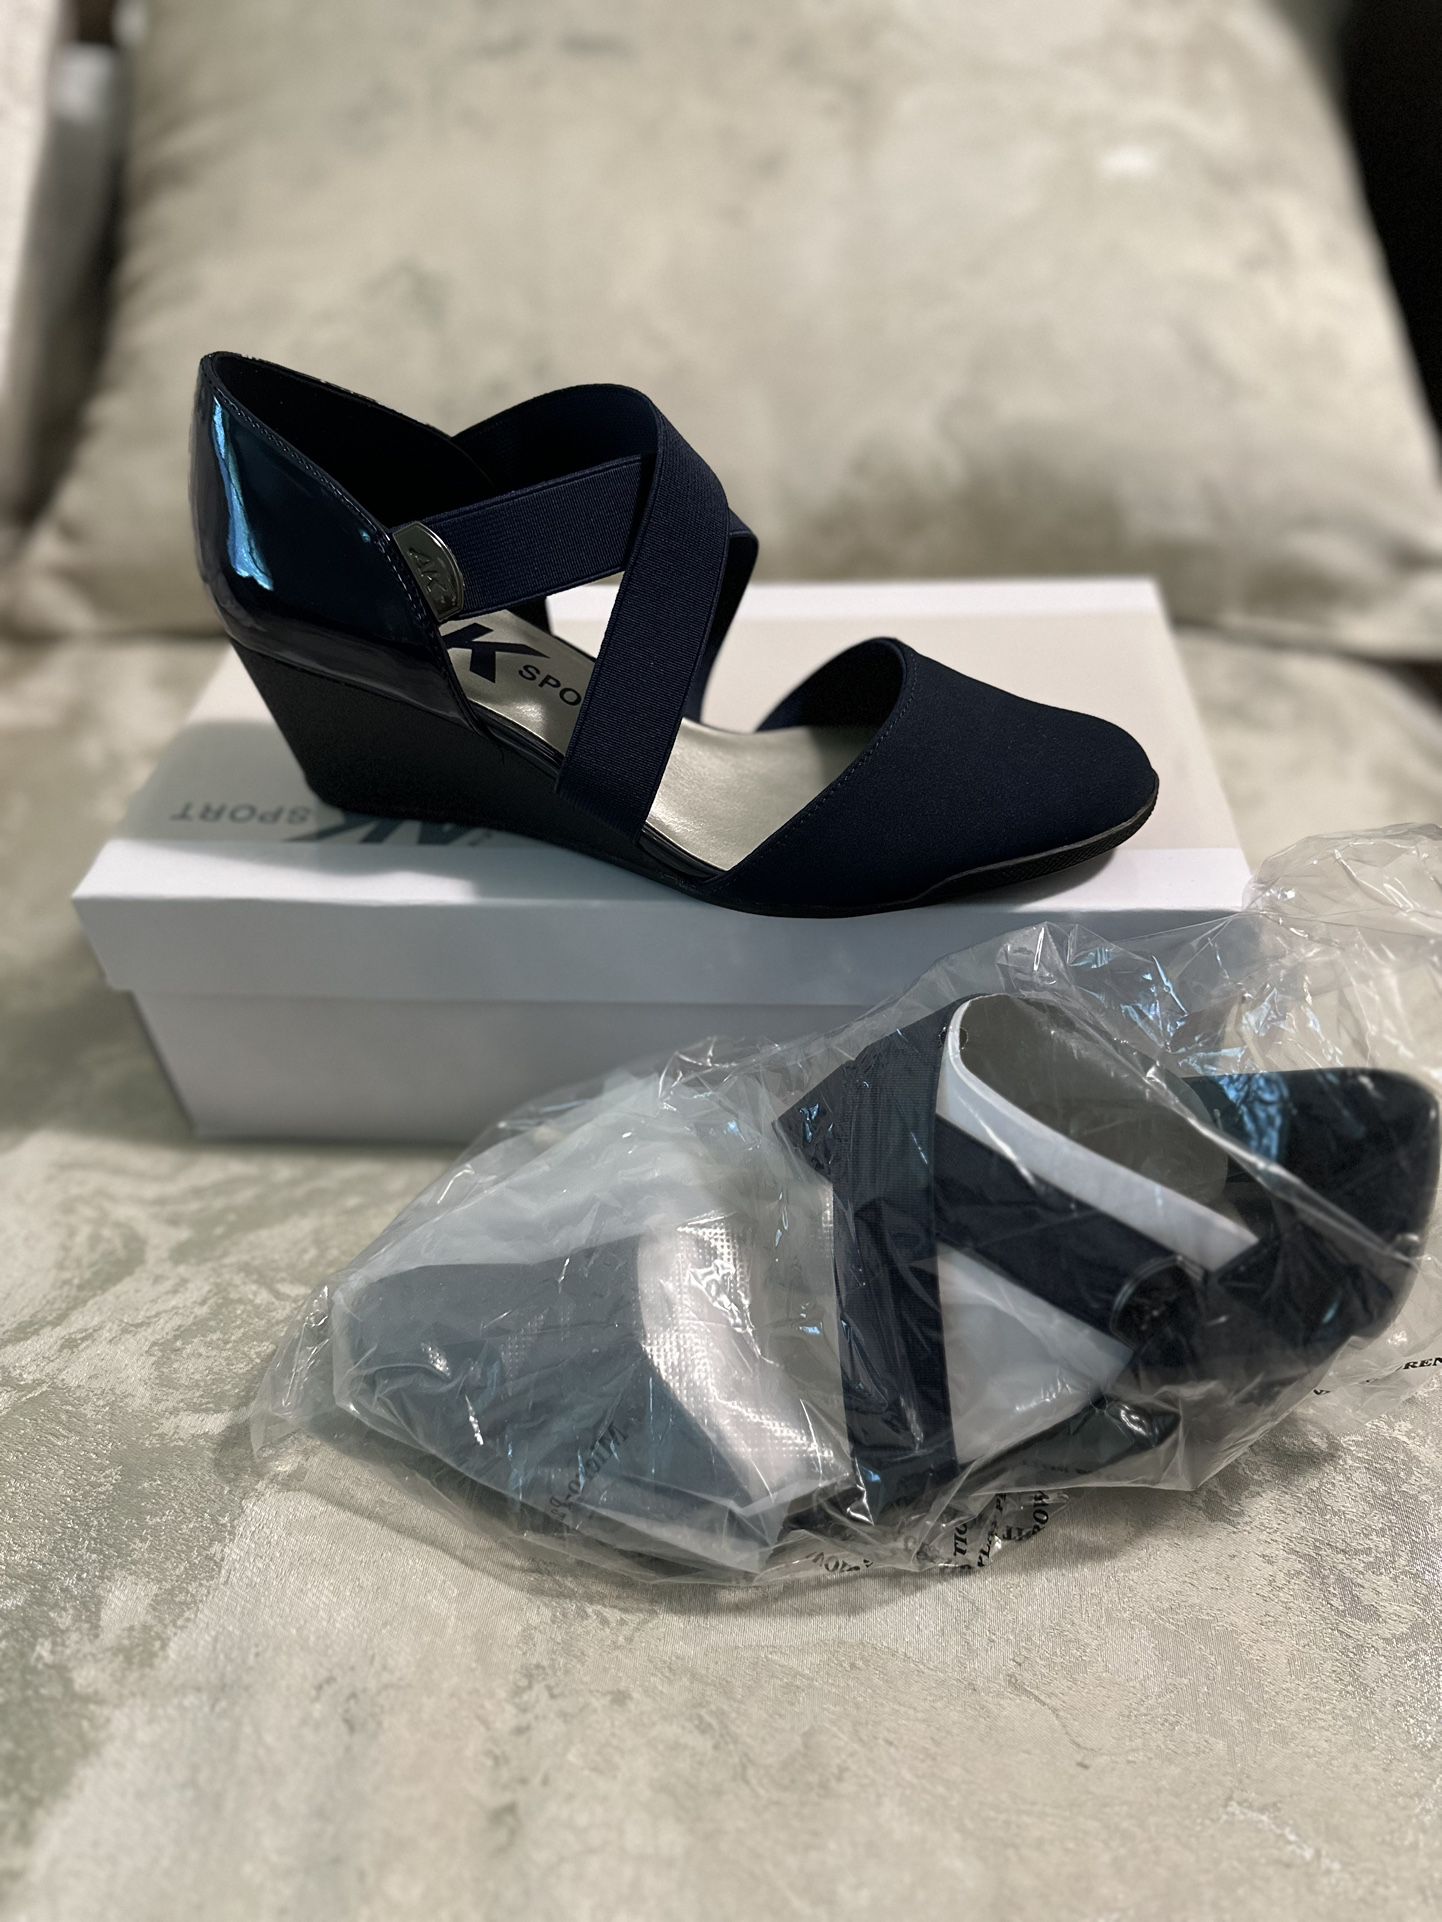 New! Anne Klein Shoes 8